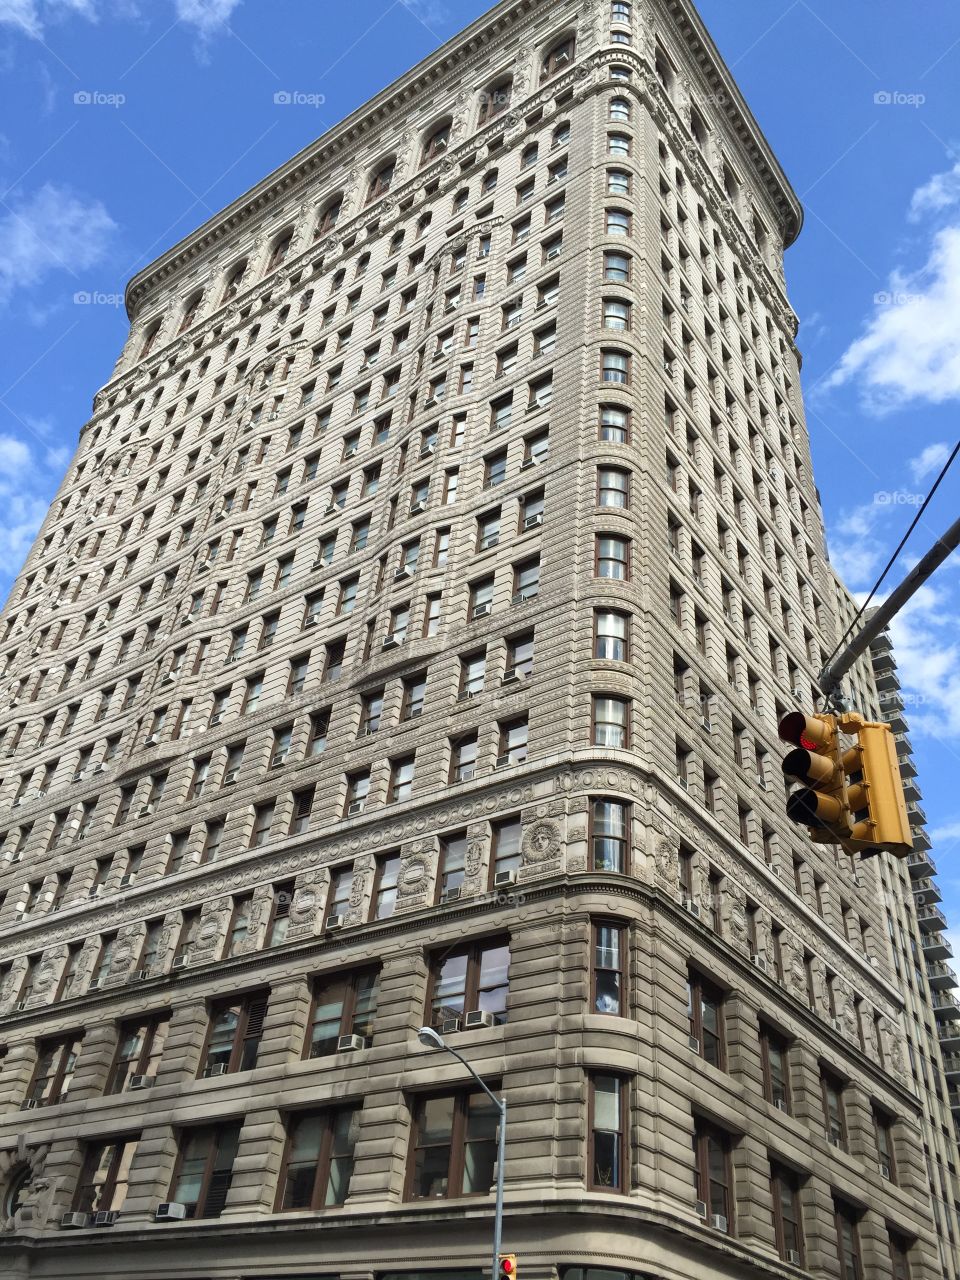 Flatiron Building - NY